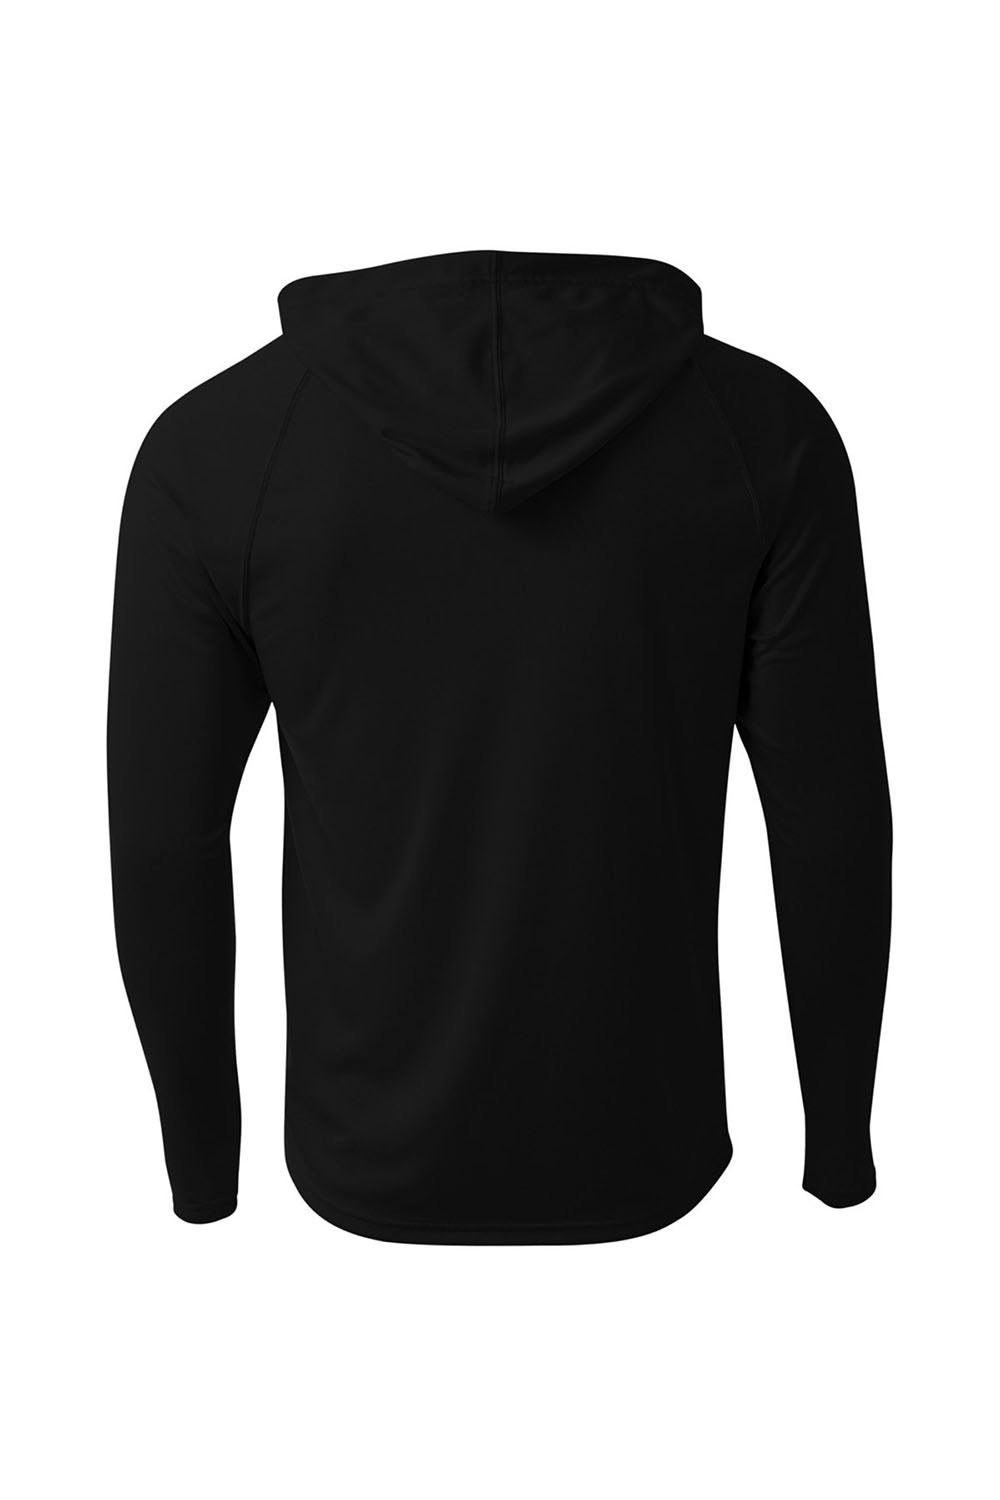 A4 N3409 Mens Performance Moisture Wicking Long Sleeve Hooded T-Shirt Hoodie Black Flat Back